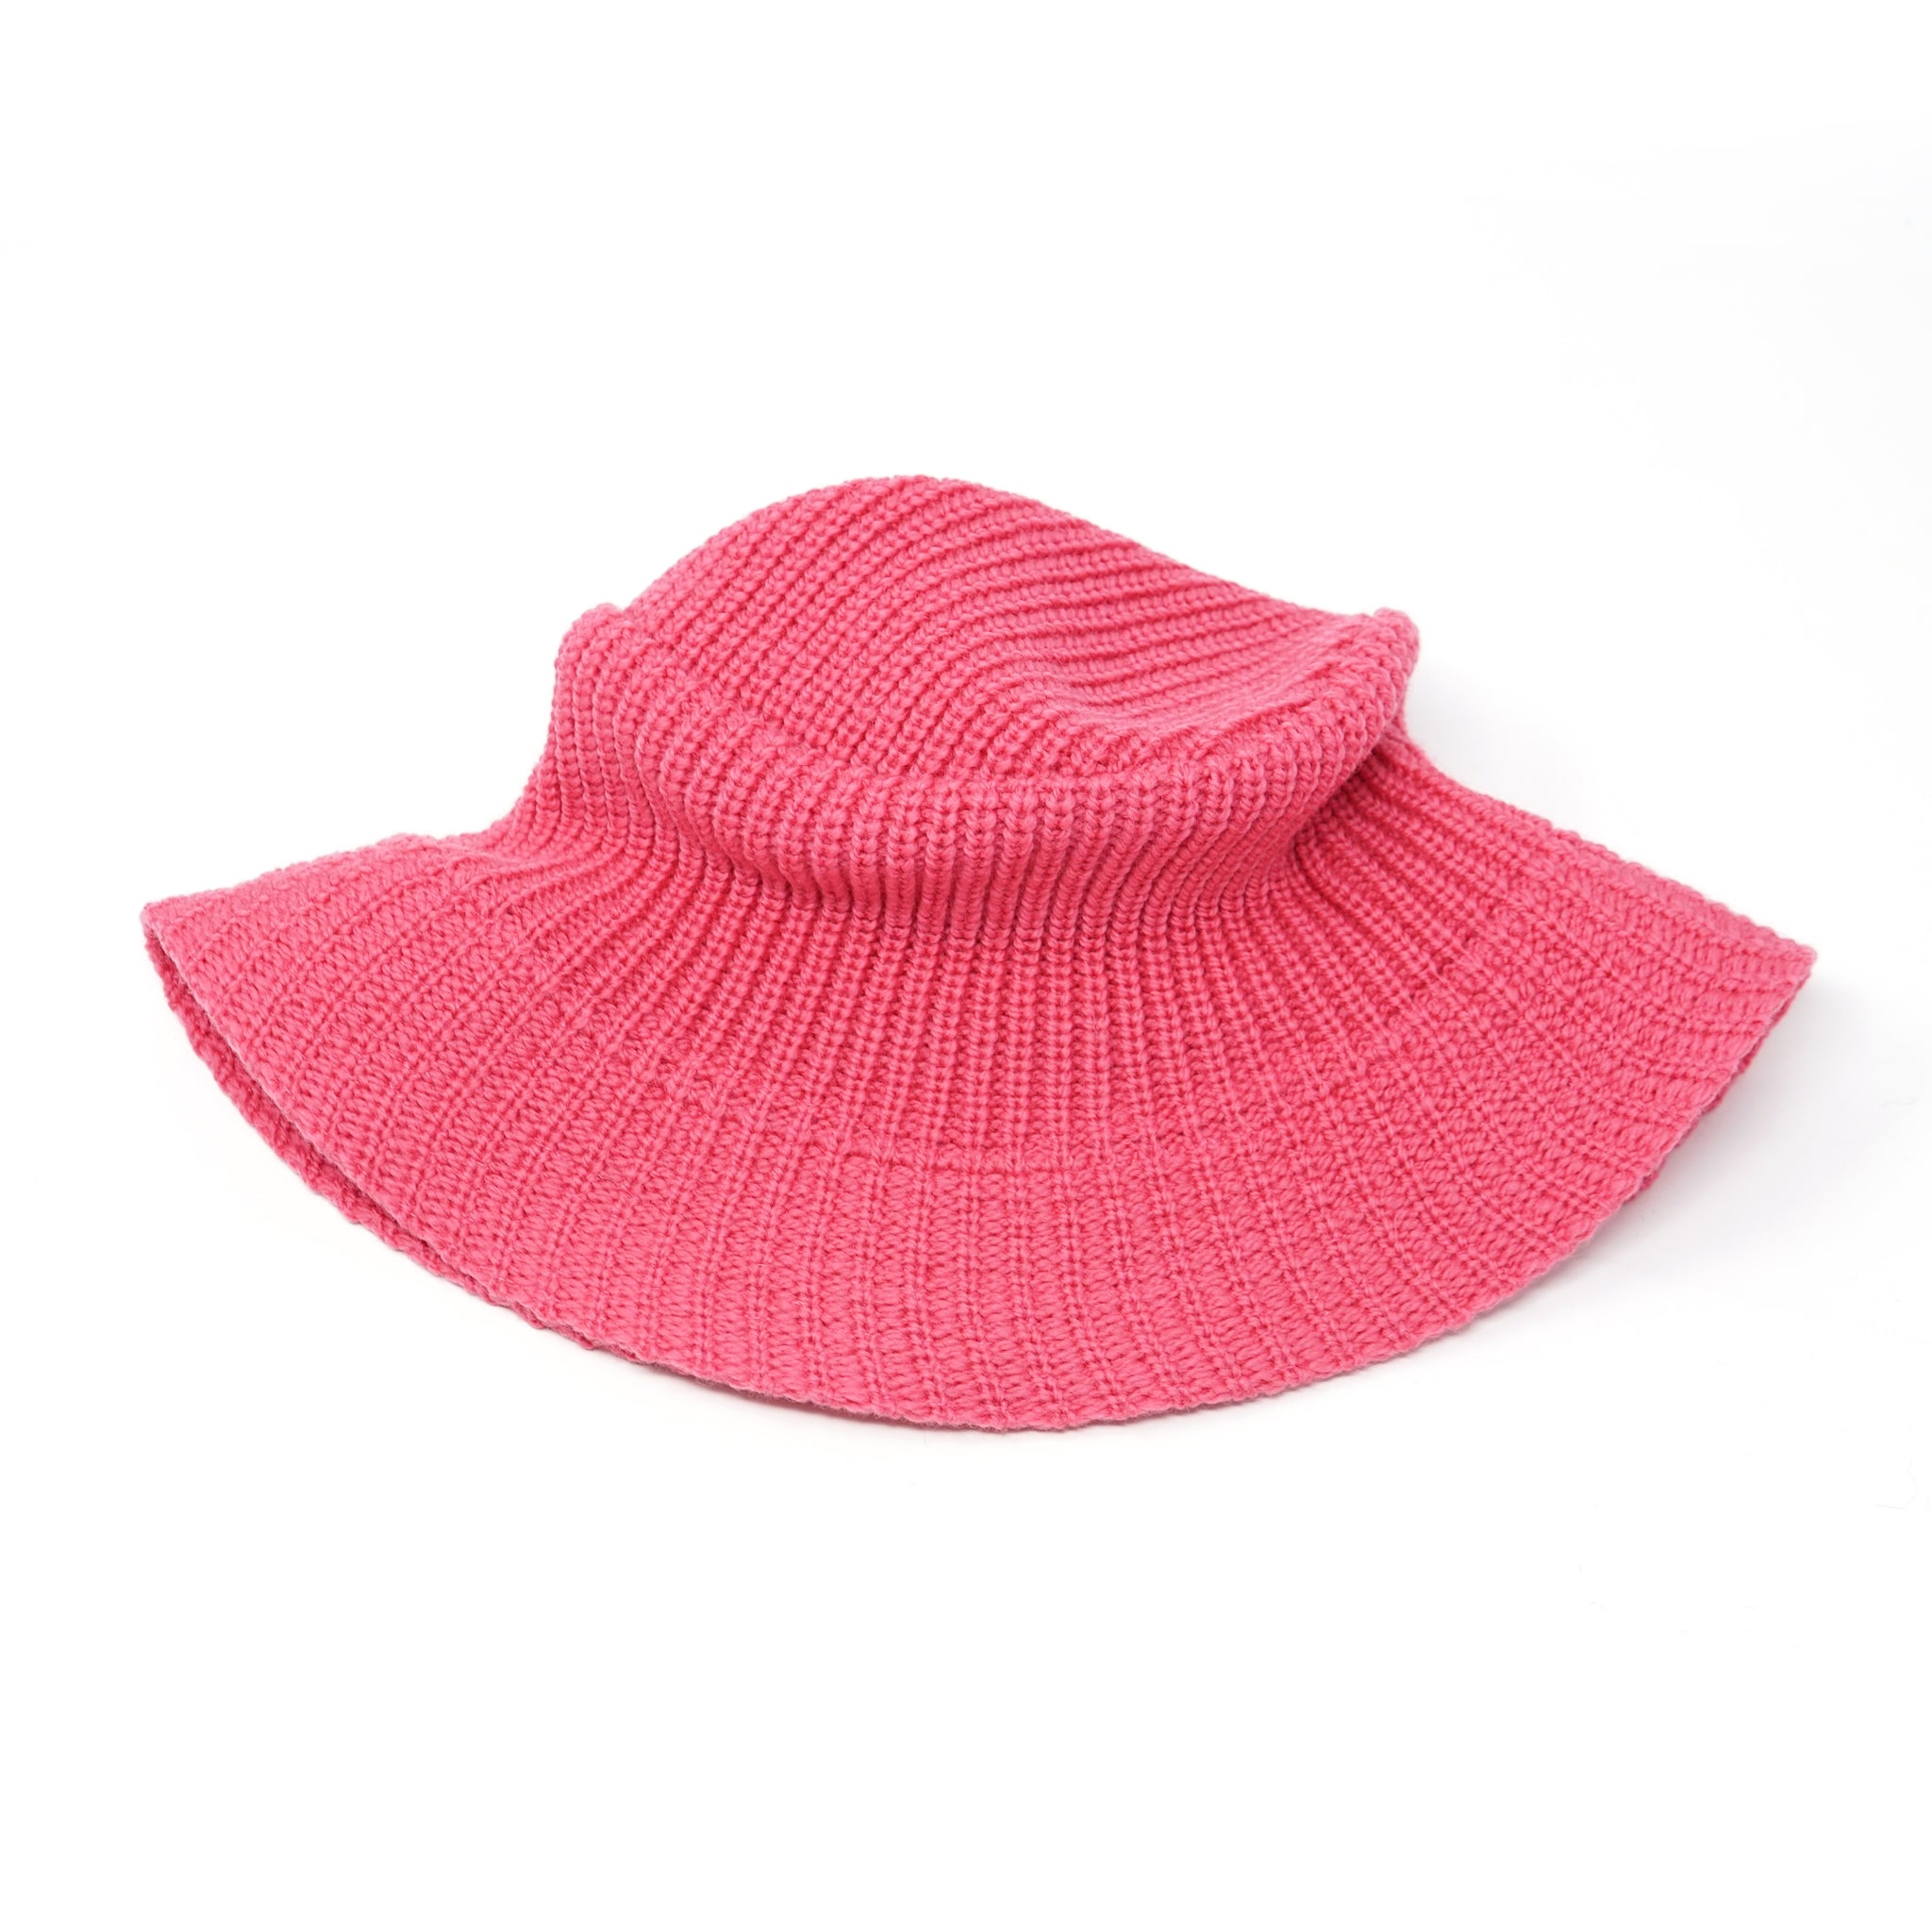 No:HL-23FW-0010 | Name:Straight Bucket Hat | Color:Rose【HIGHLAND 2000】